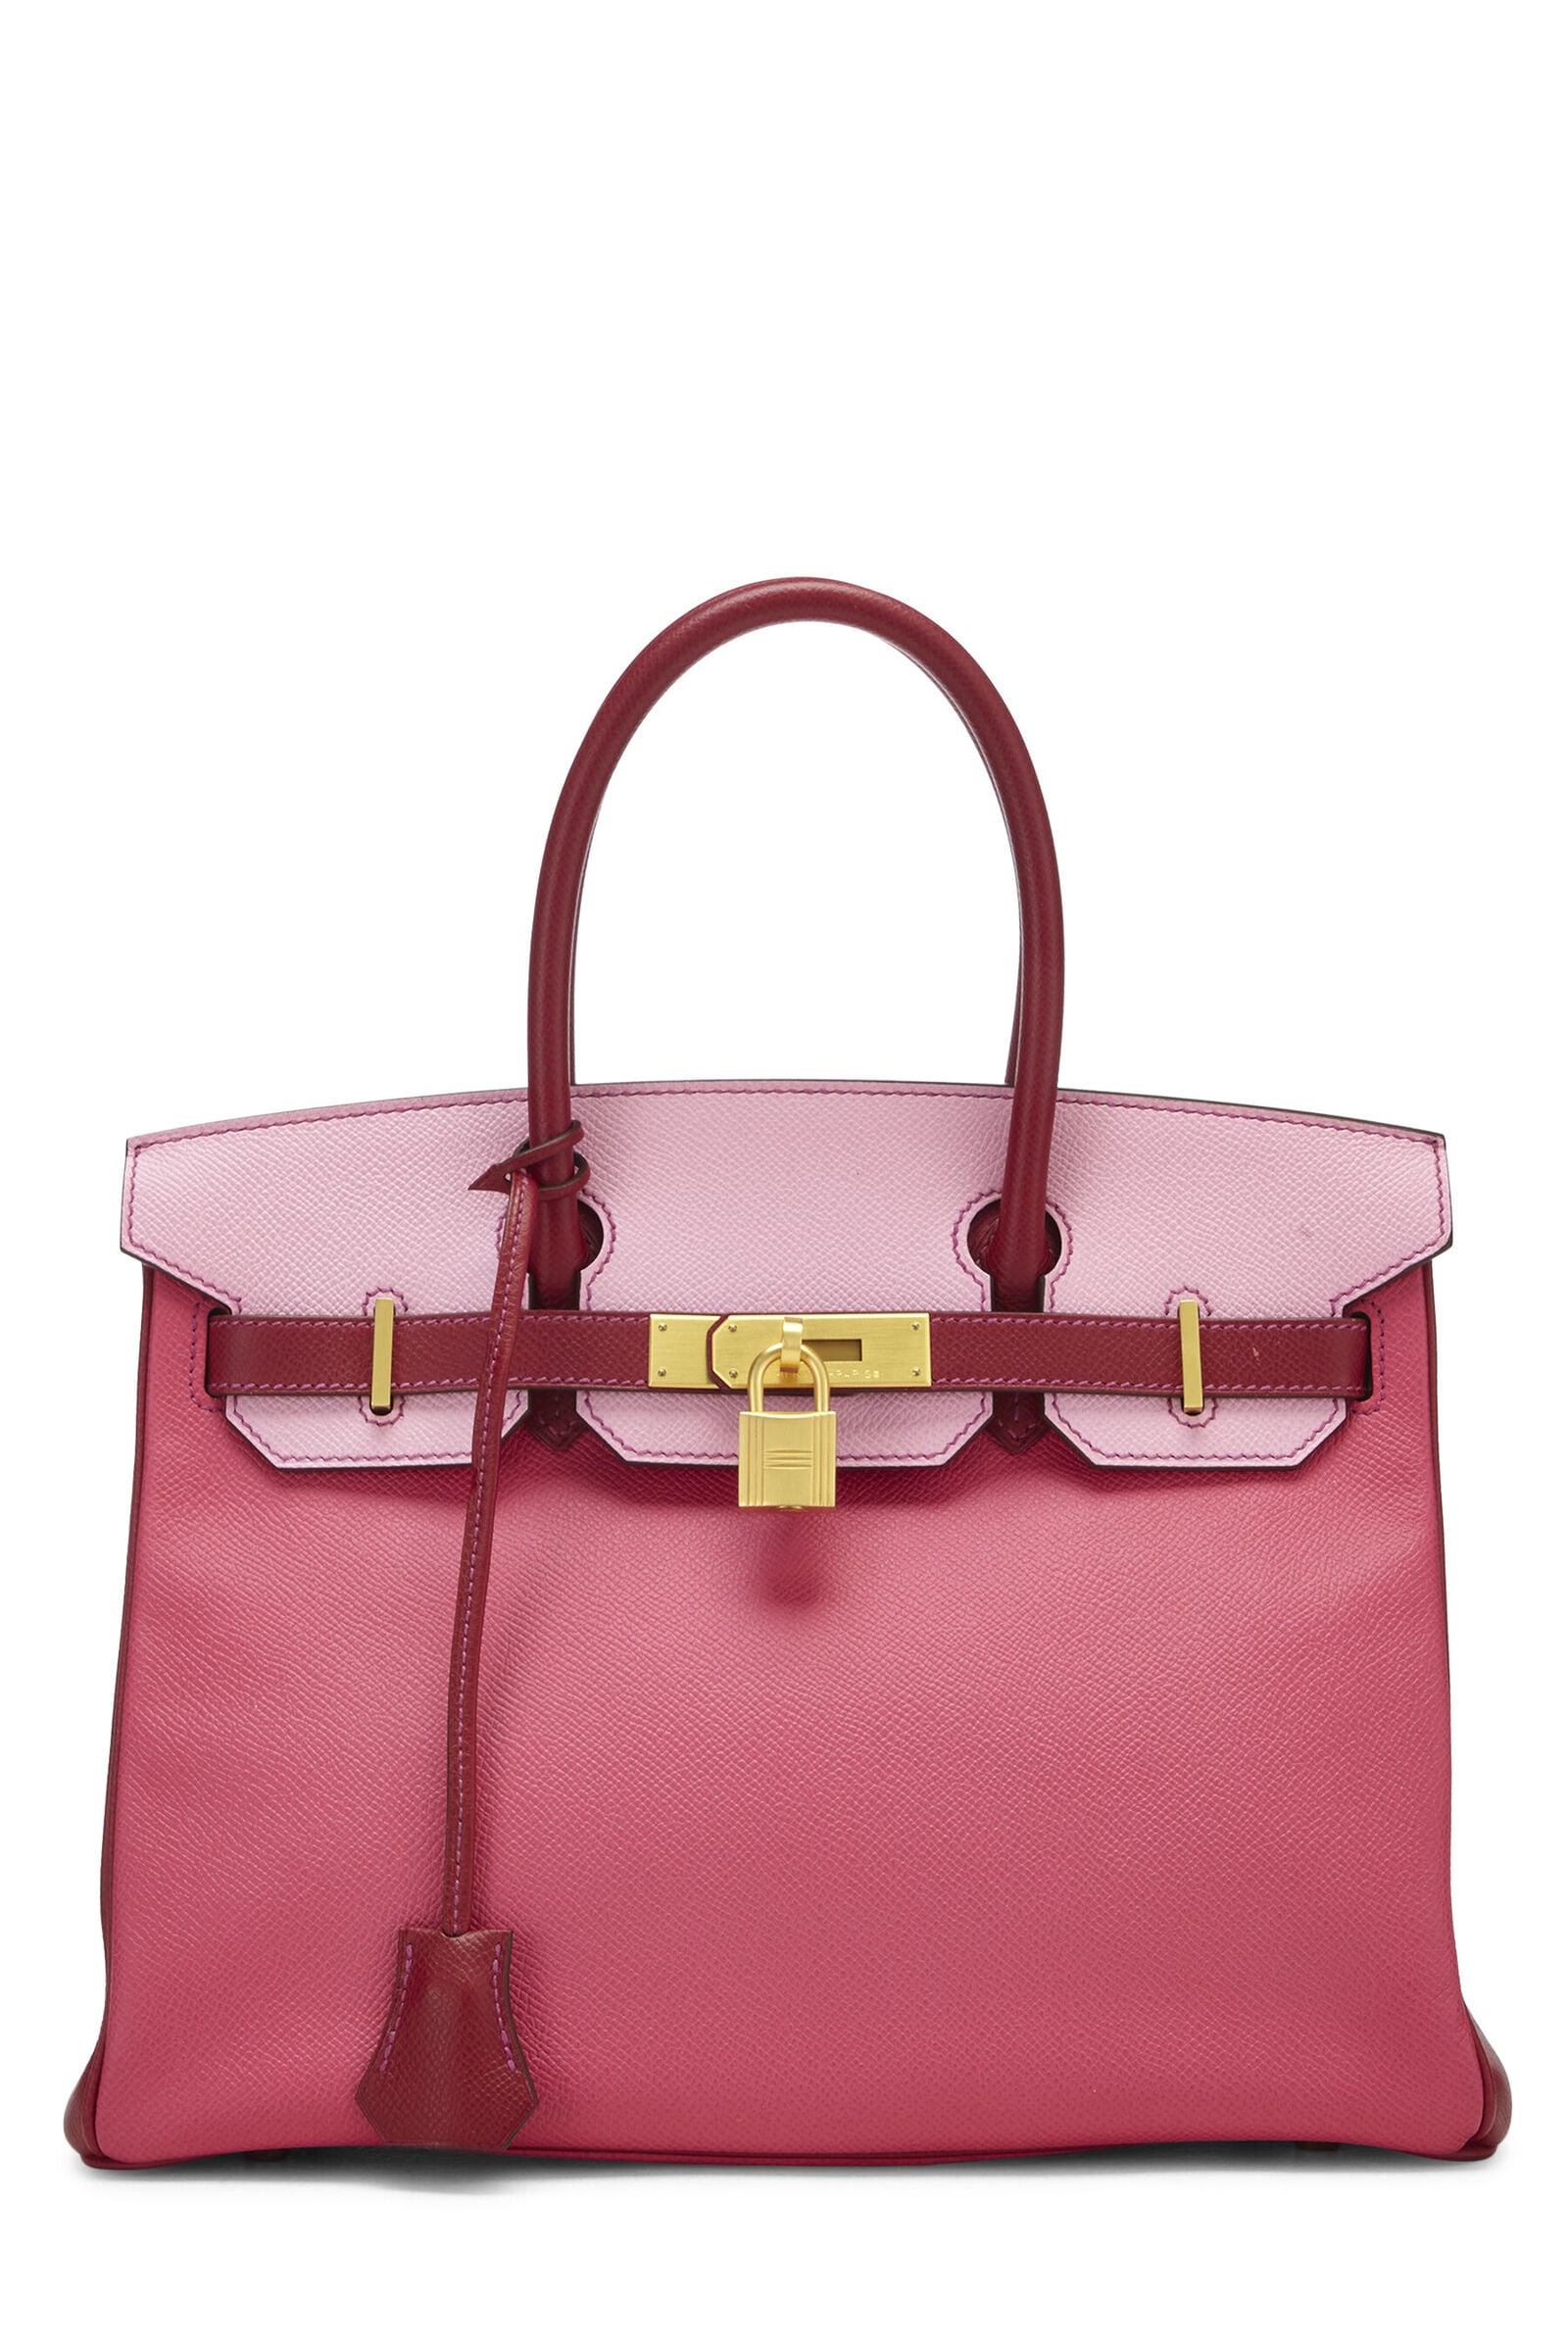 A Pink Colorblock Hermès Birkin, The Hermès Birkin Bag Is the World's Most  Coveted Fashion Item — Where to Shop